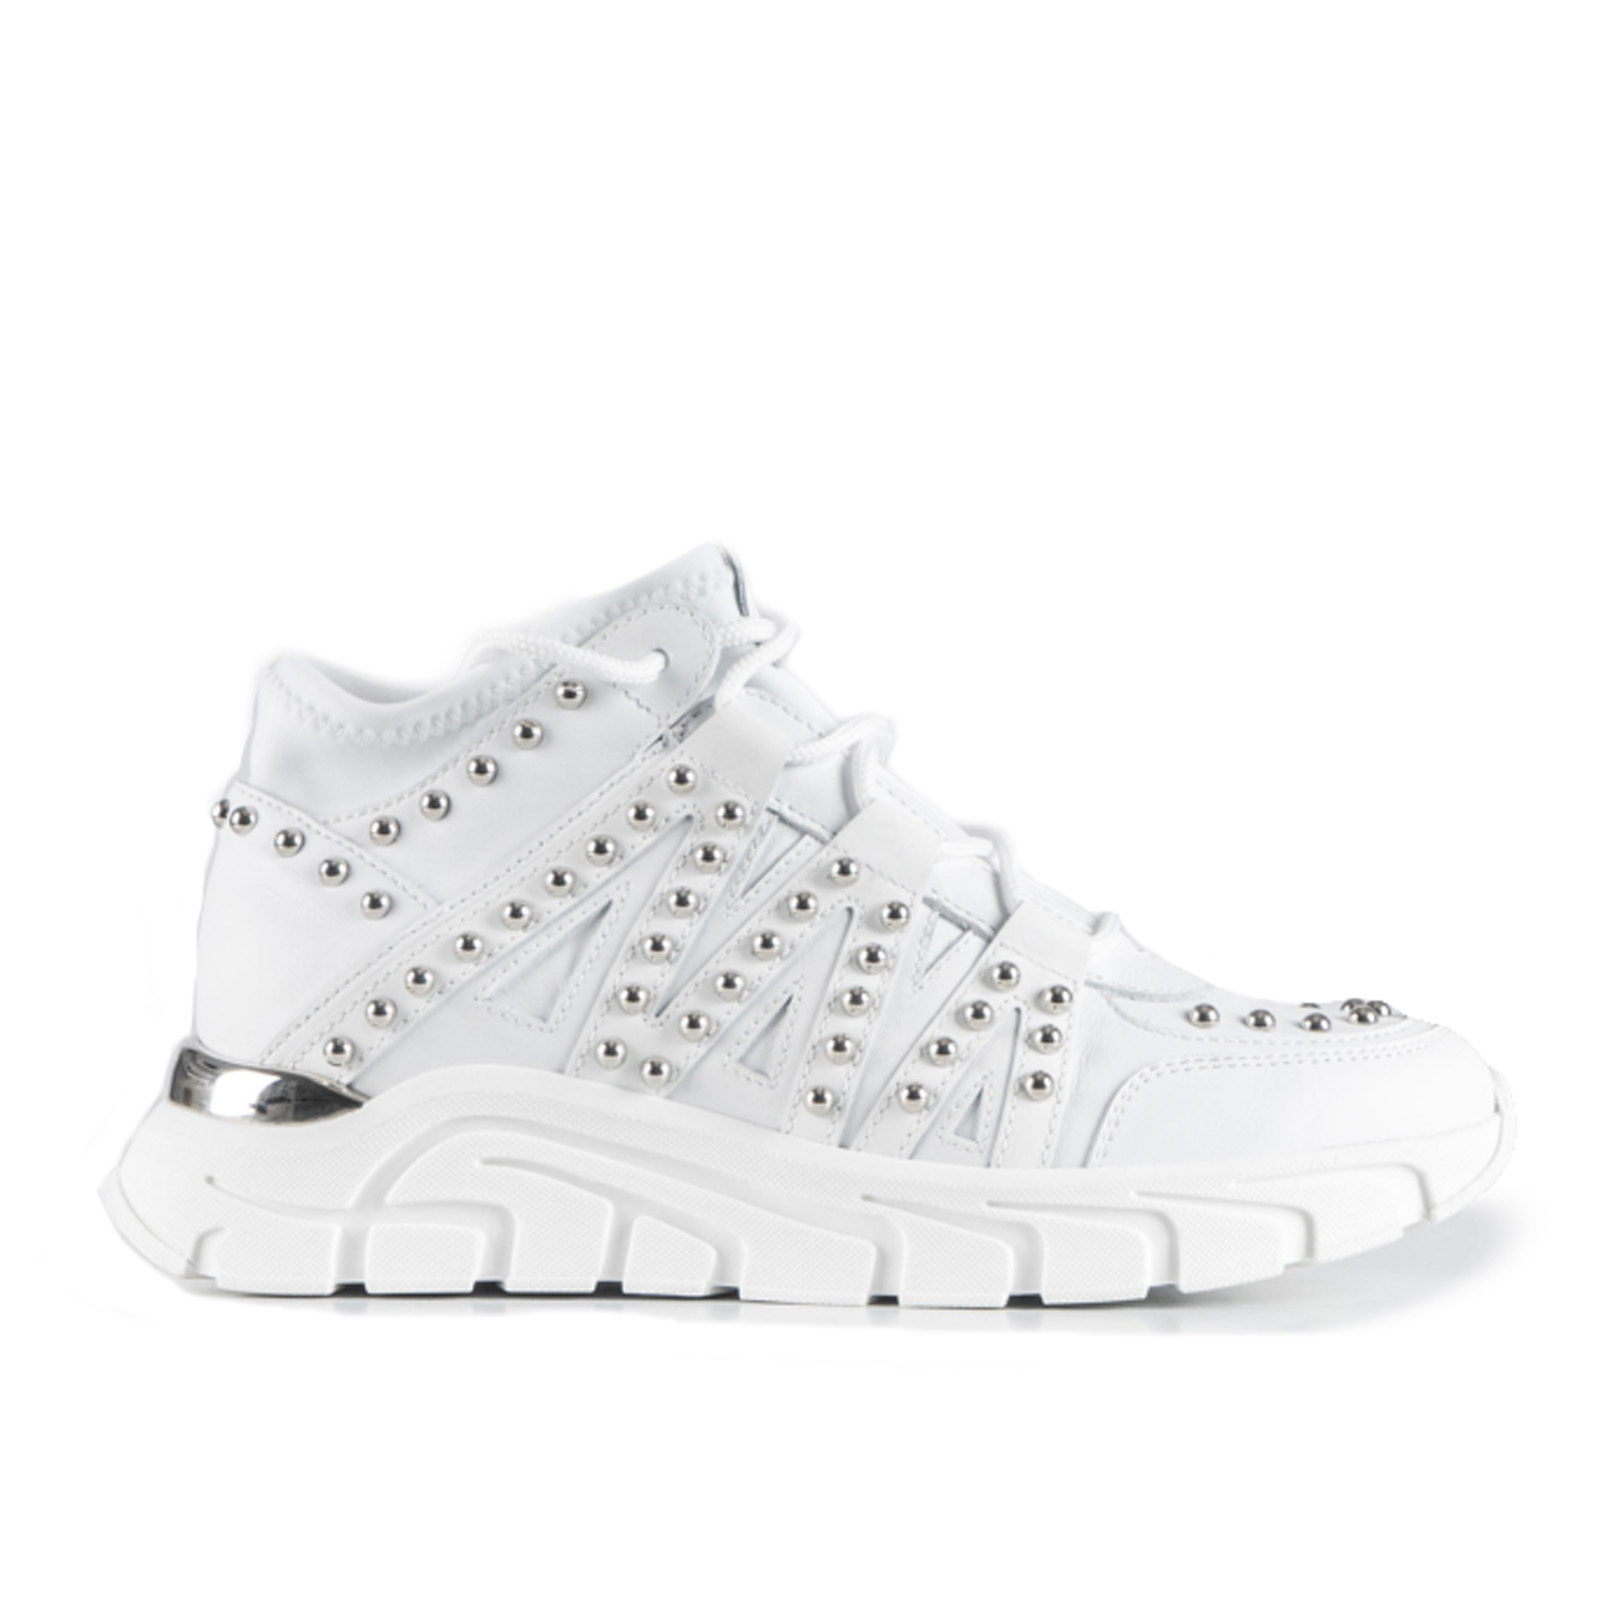 Sneakers Donna in Pelle bianca con Borchie EVAMONDE7